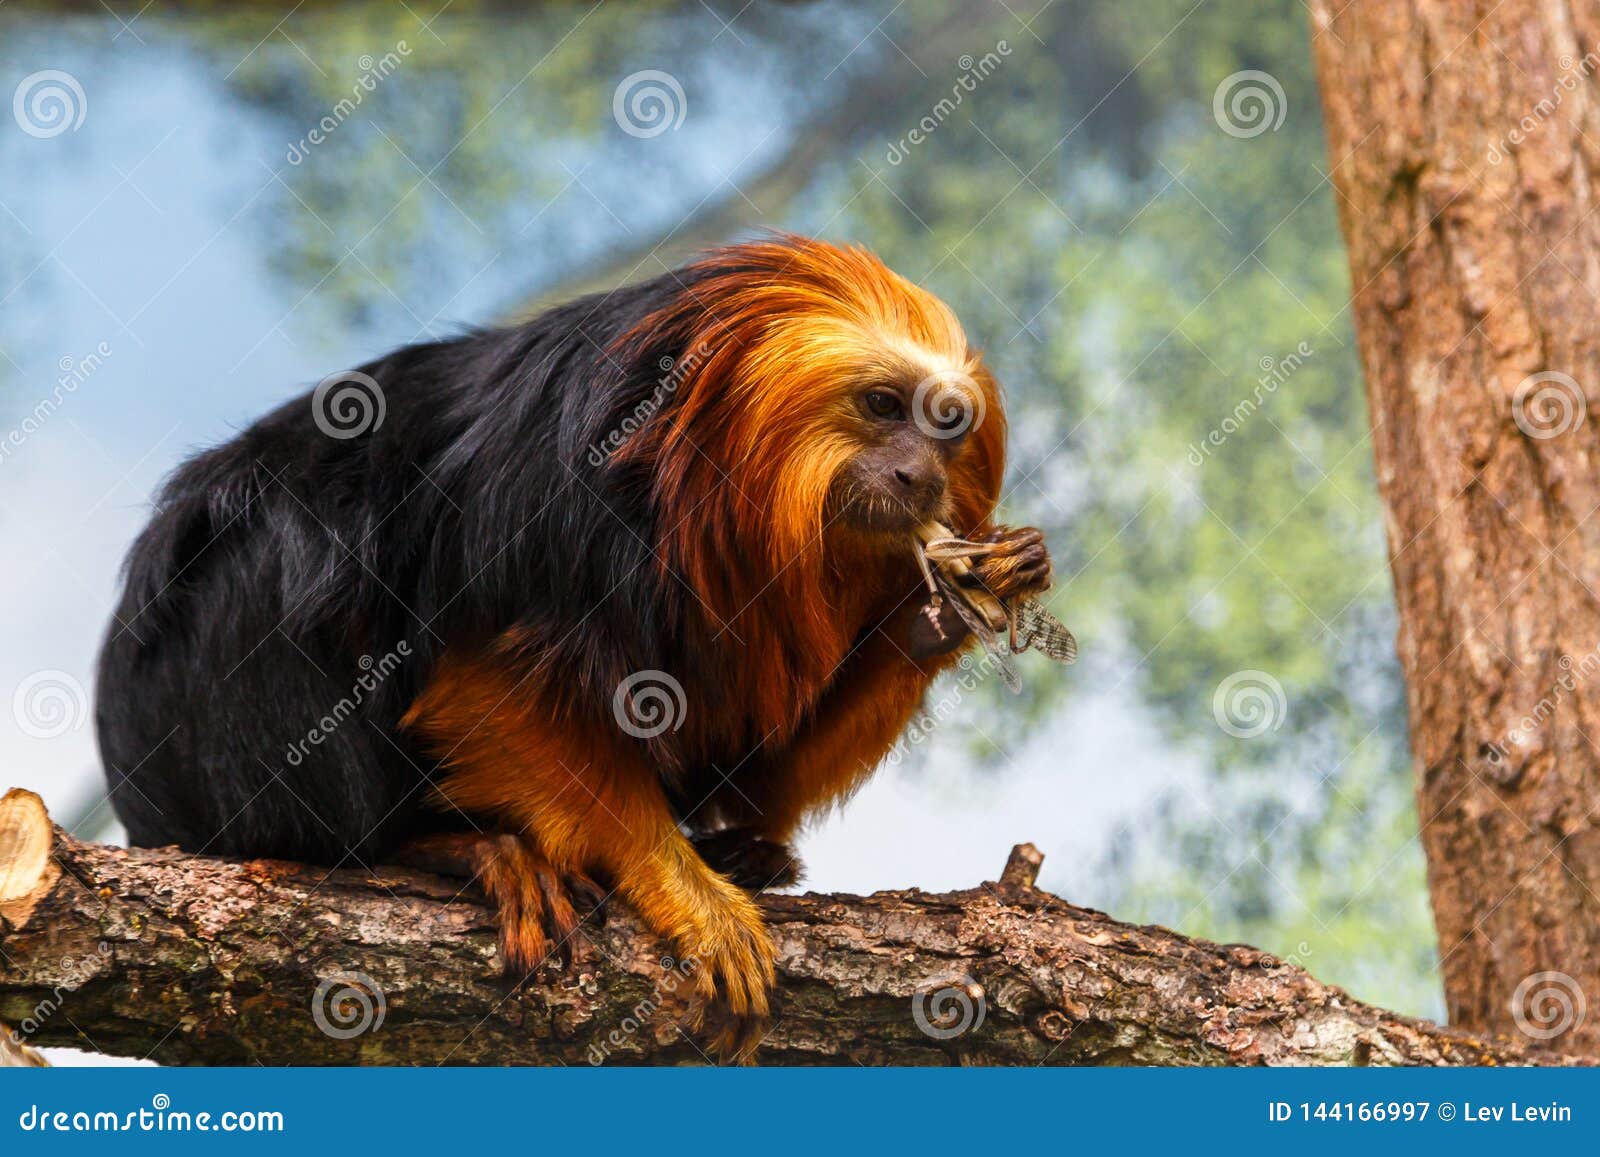 Golden hair lion tamarin stock image. Image of small - 144166997